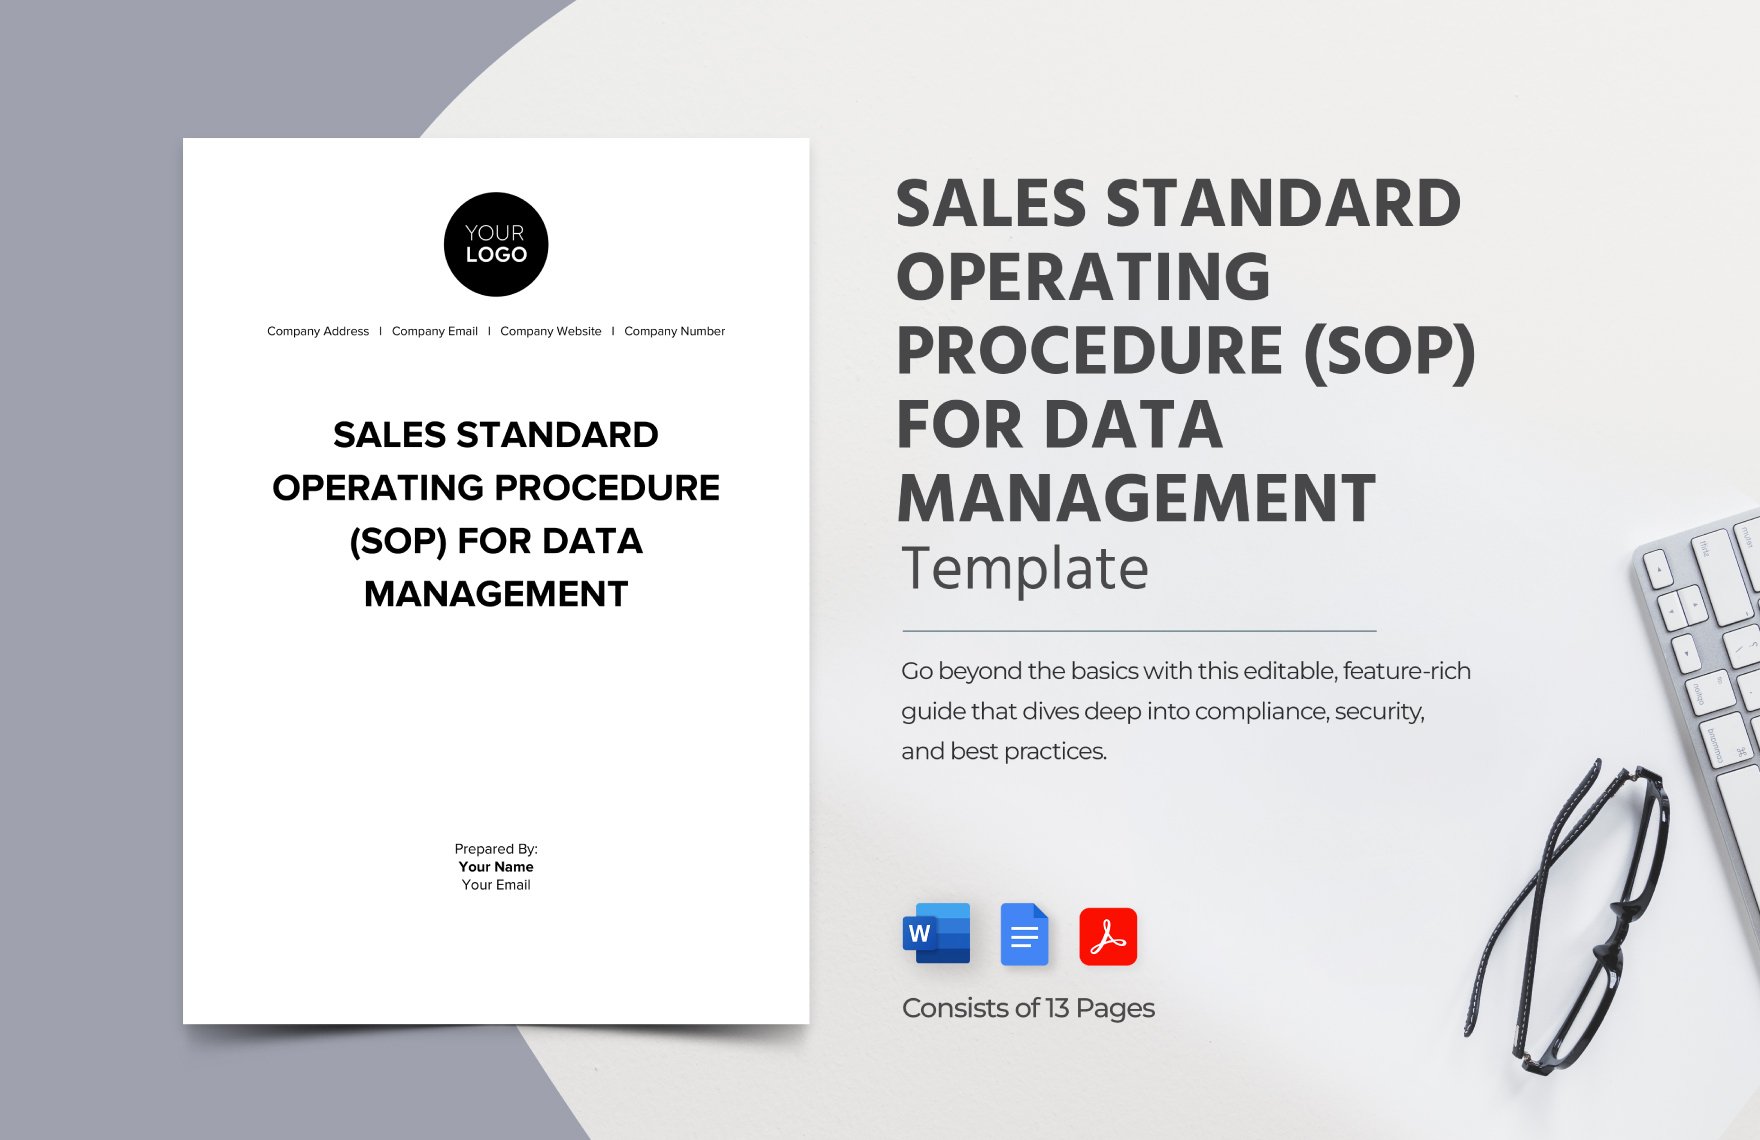 Sales Standard Operating Procedure (SOP) for Data Management Template